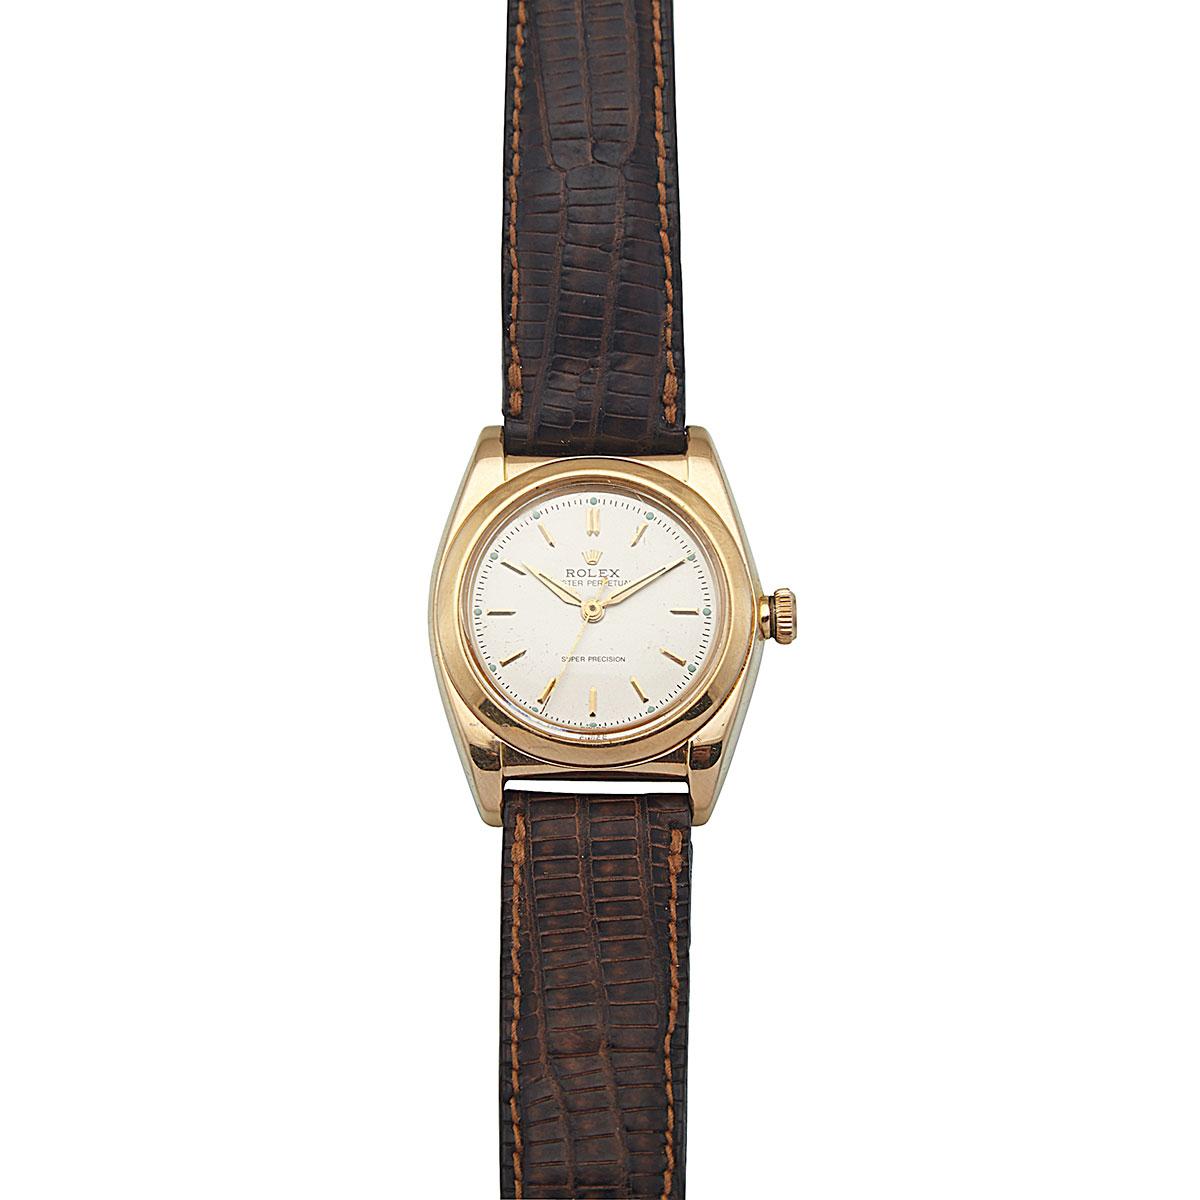 Rolex Oyster Perpetual “BubbleBack” Wristwatch